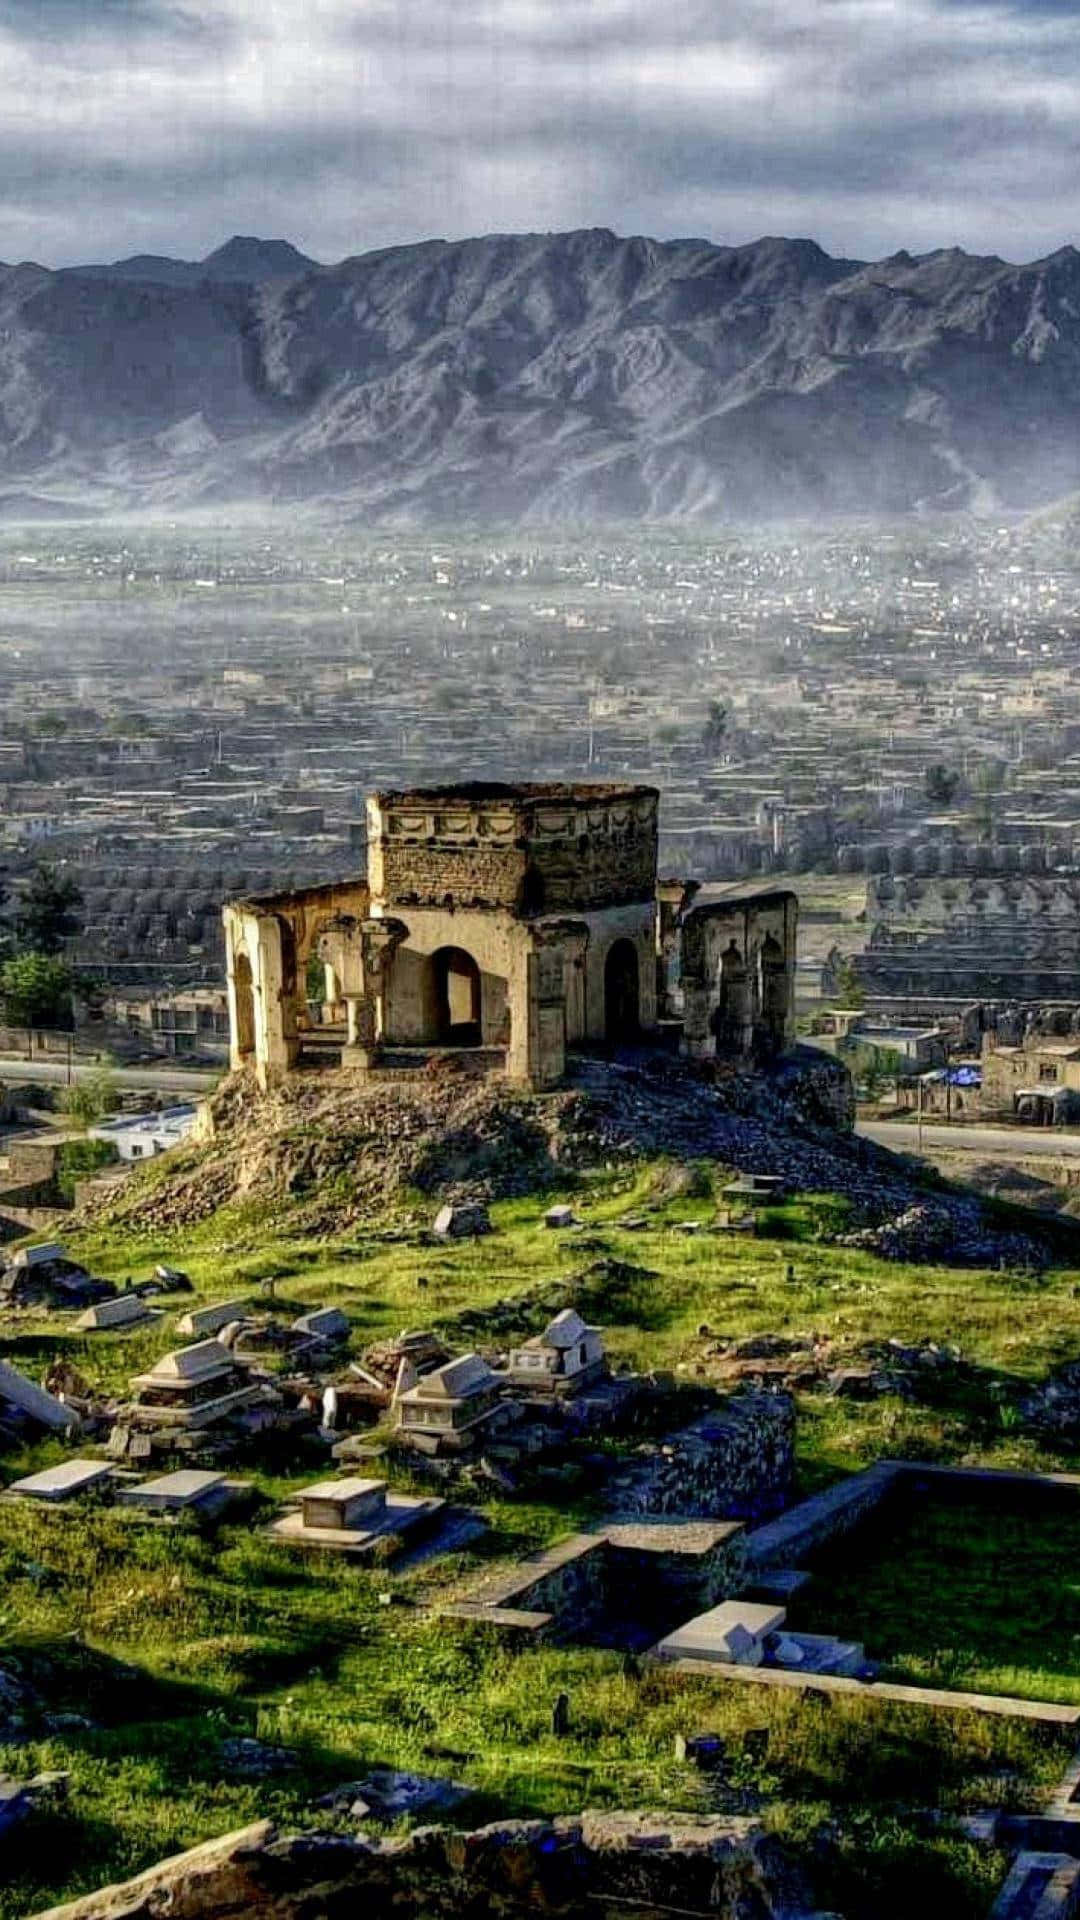 Afghanistanbakgrund